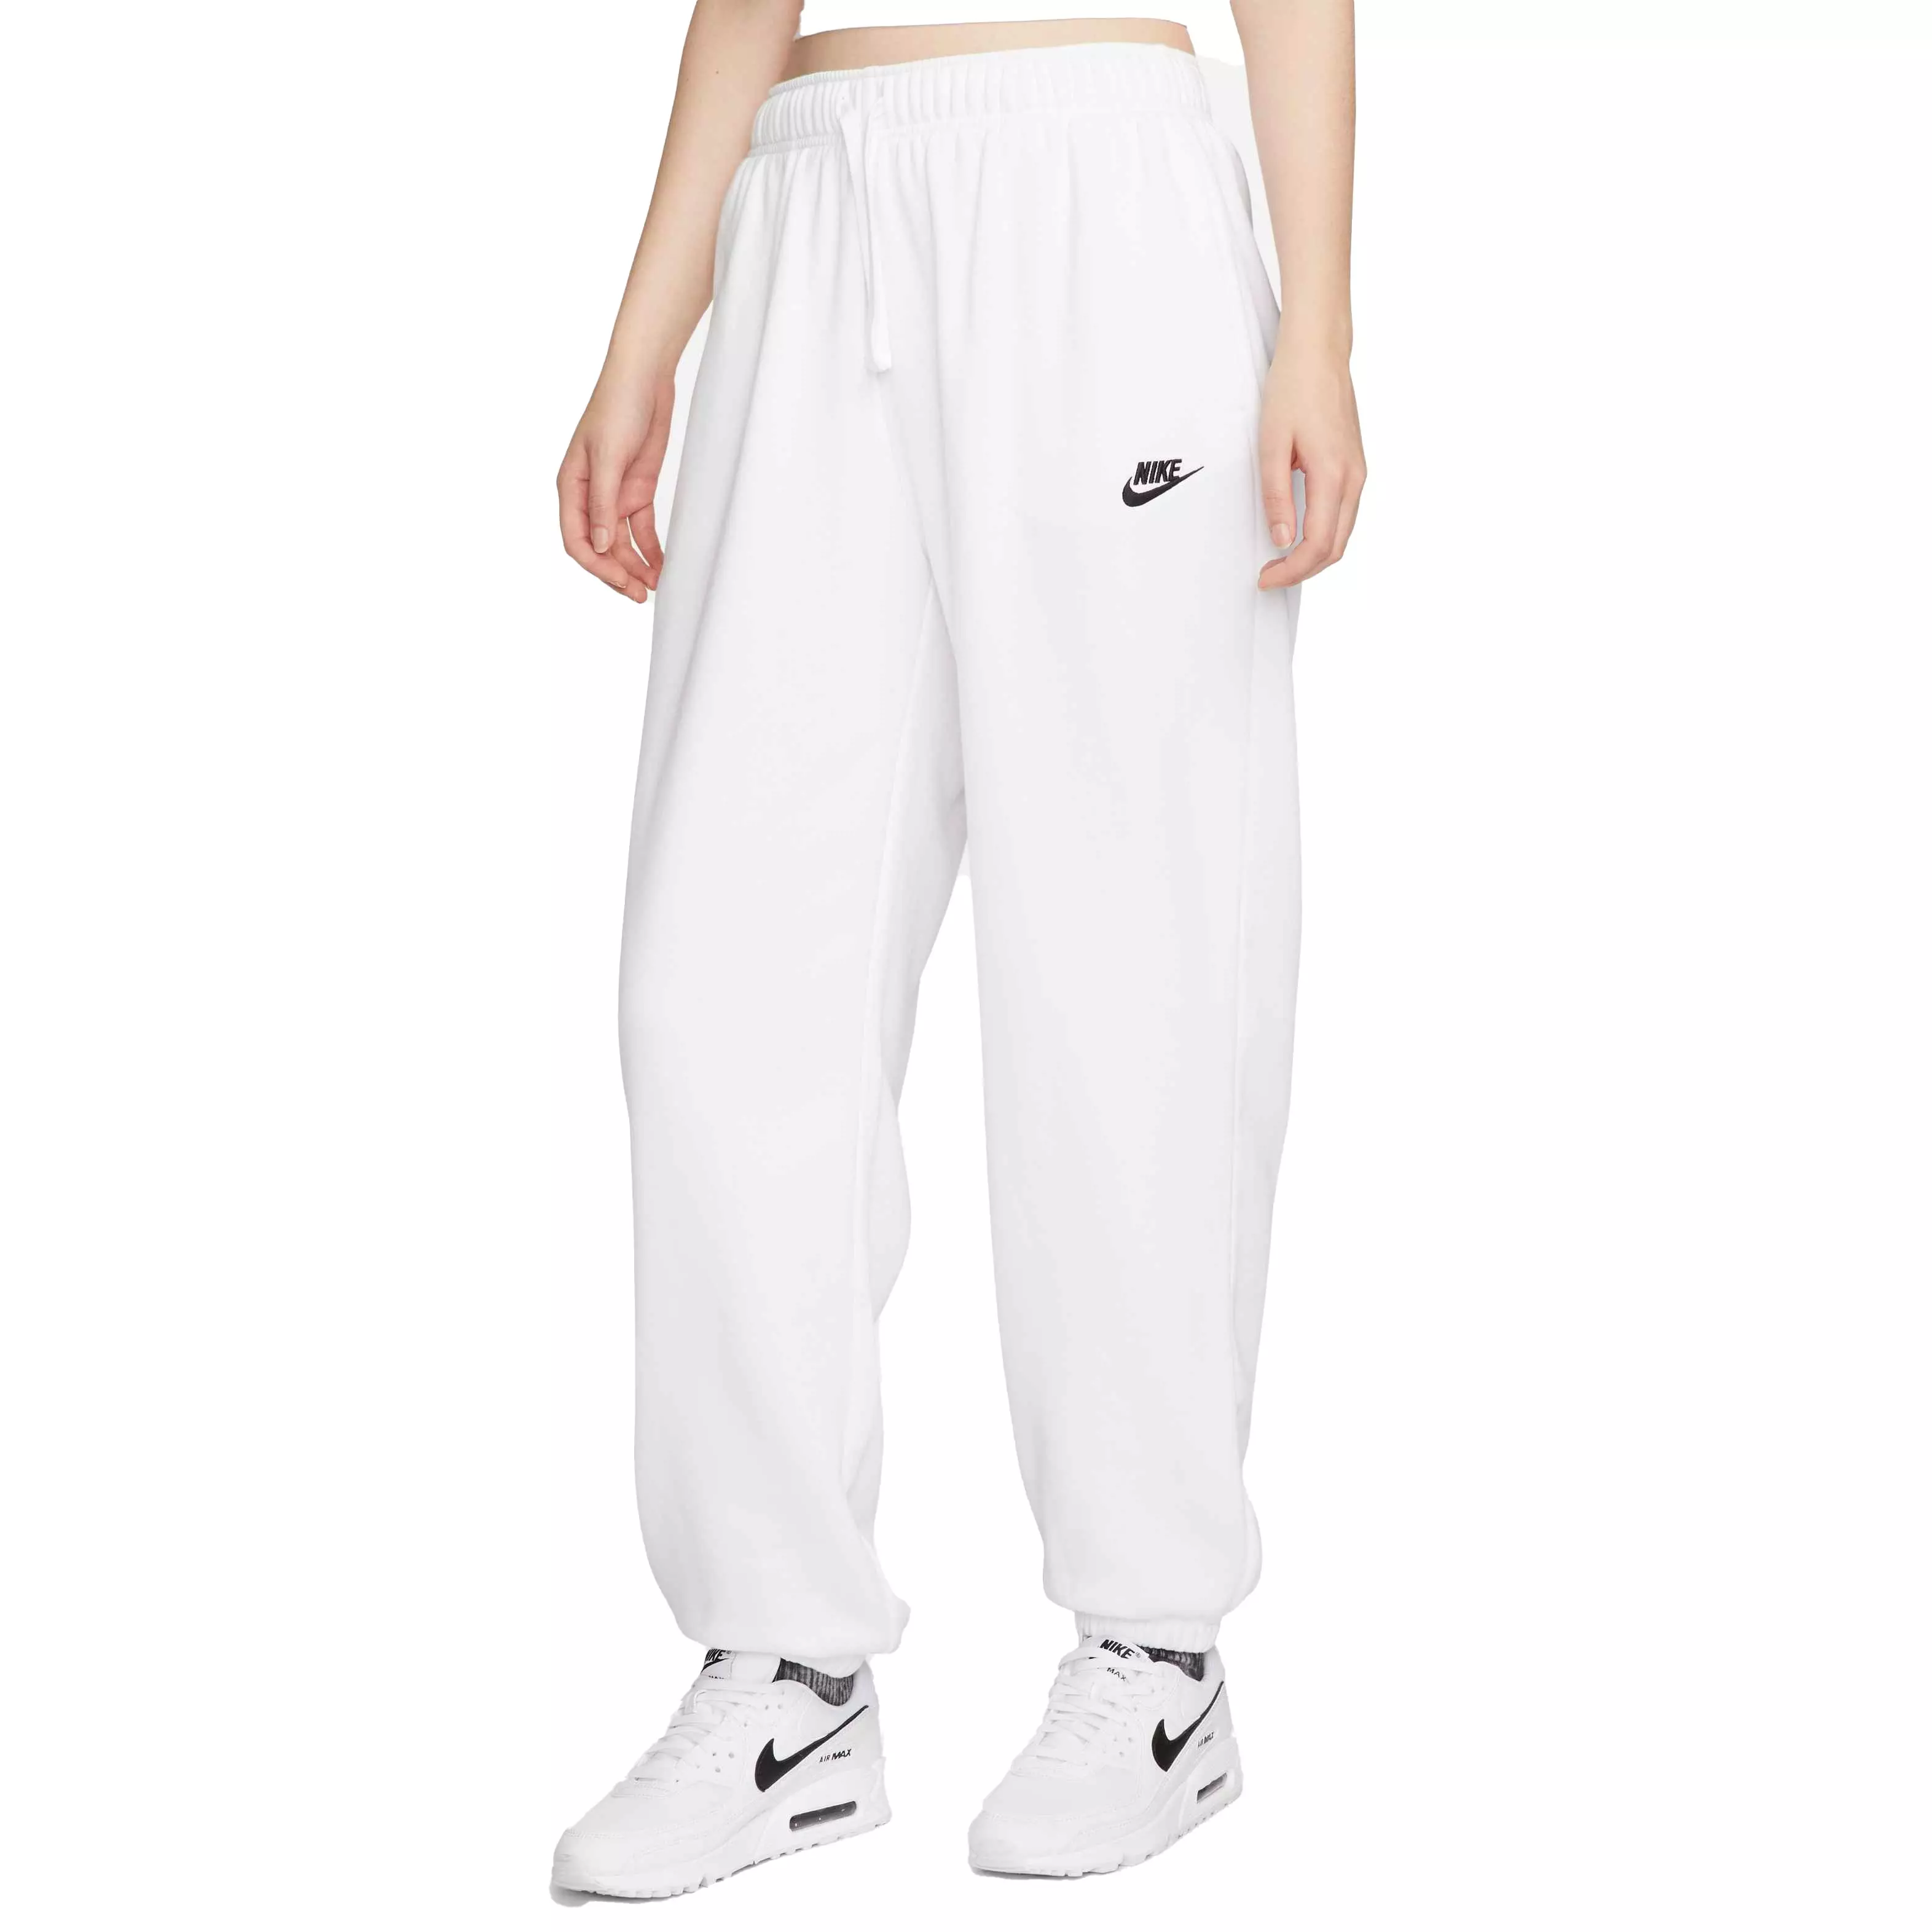 Nike Sweatpants Women Large Black White Joggers Warm Ups Ladies